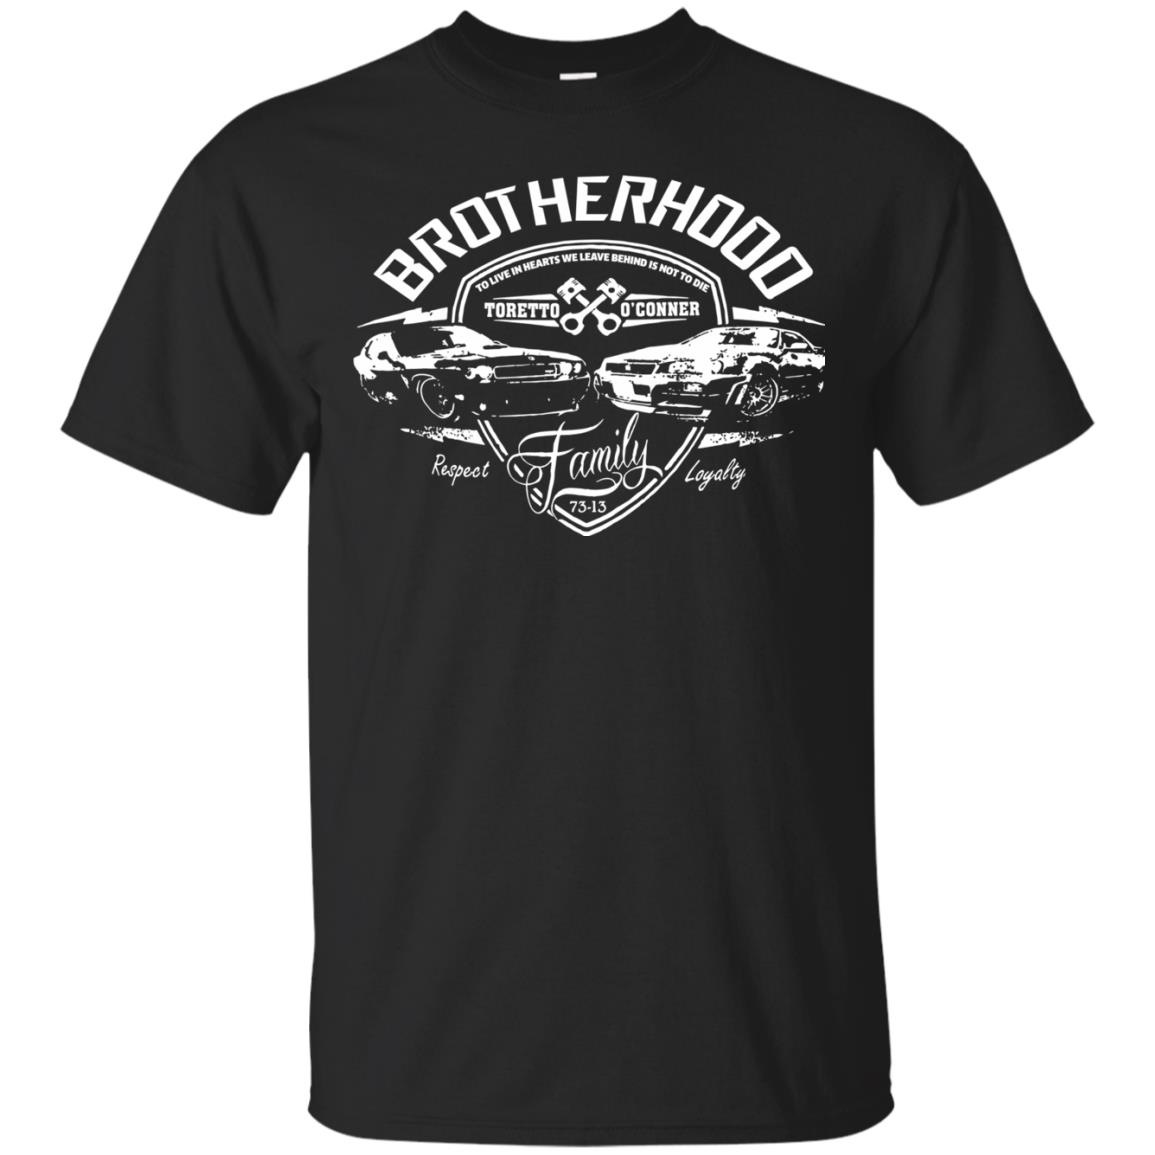 fast and furious brotherhood shirt - black